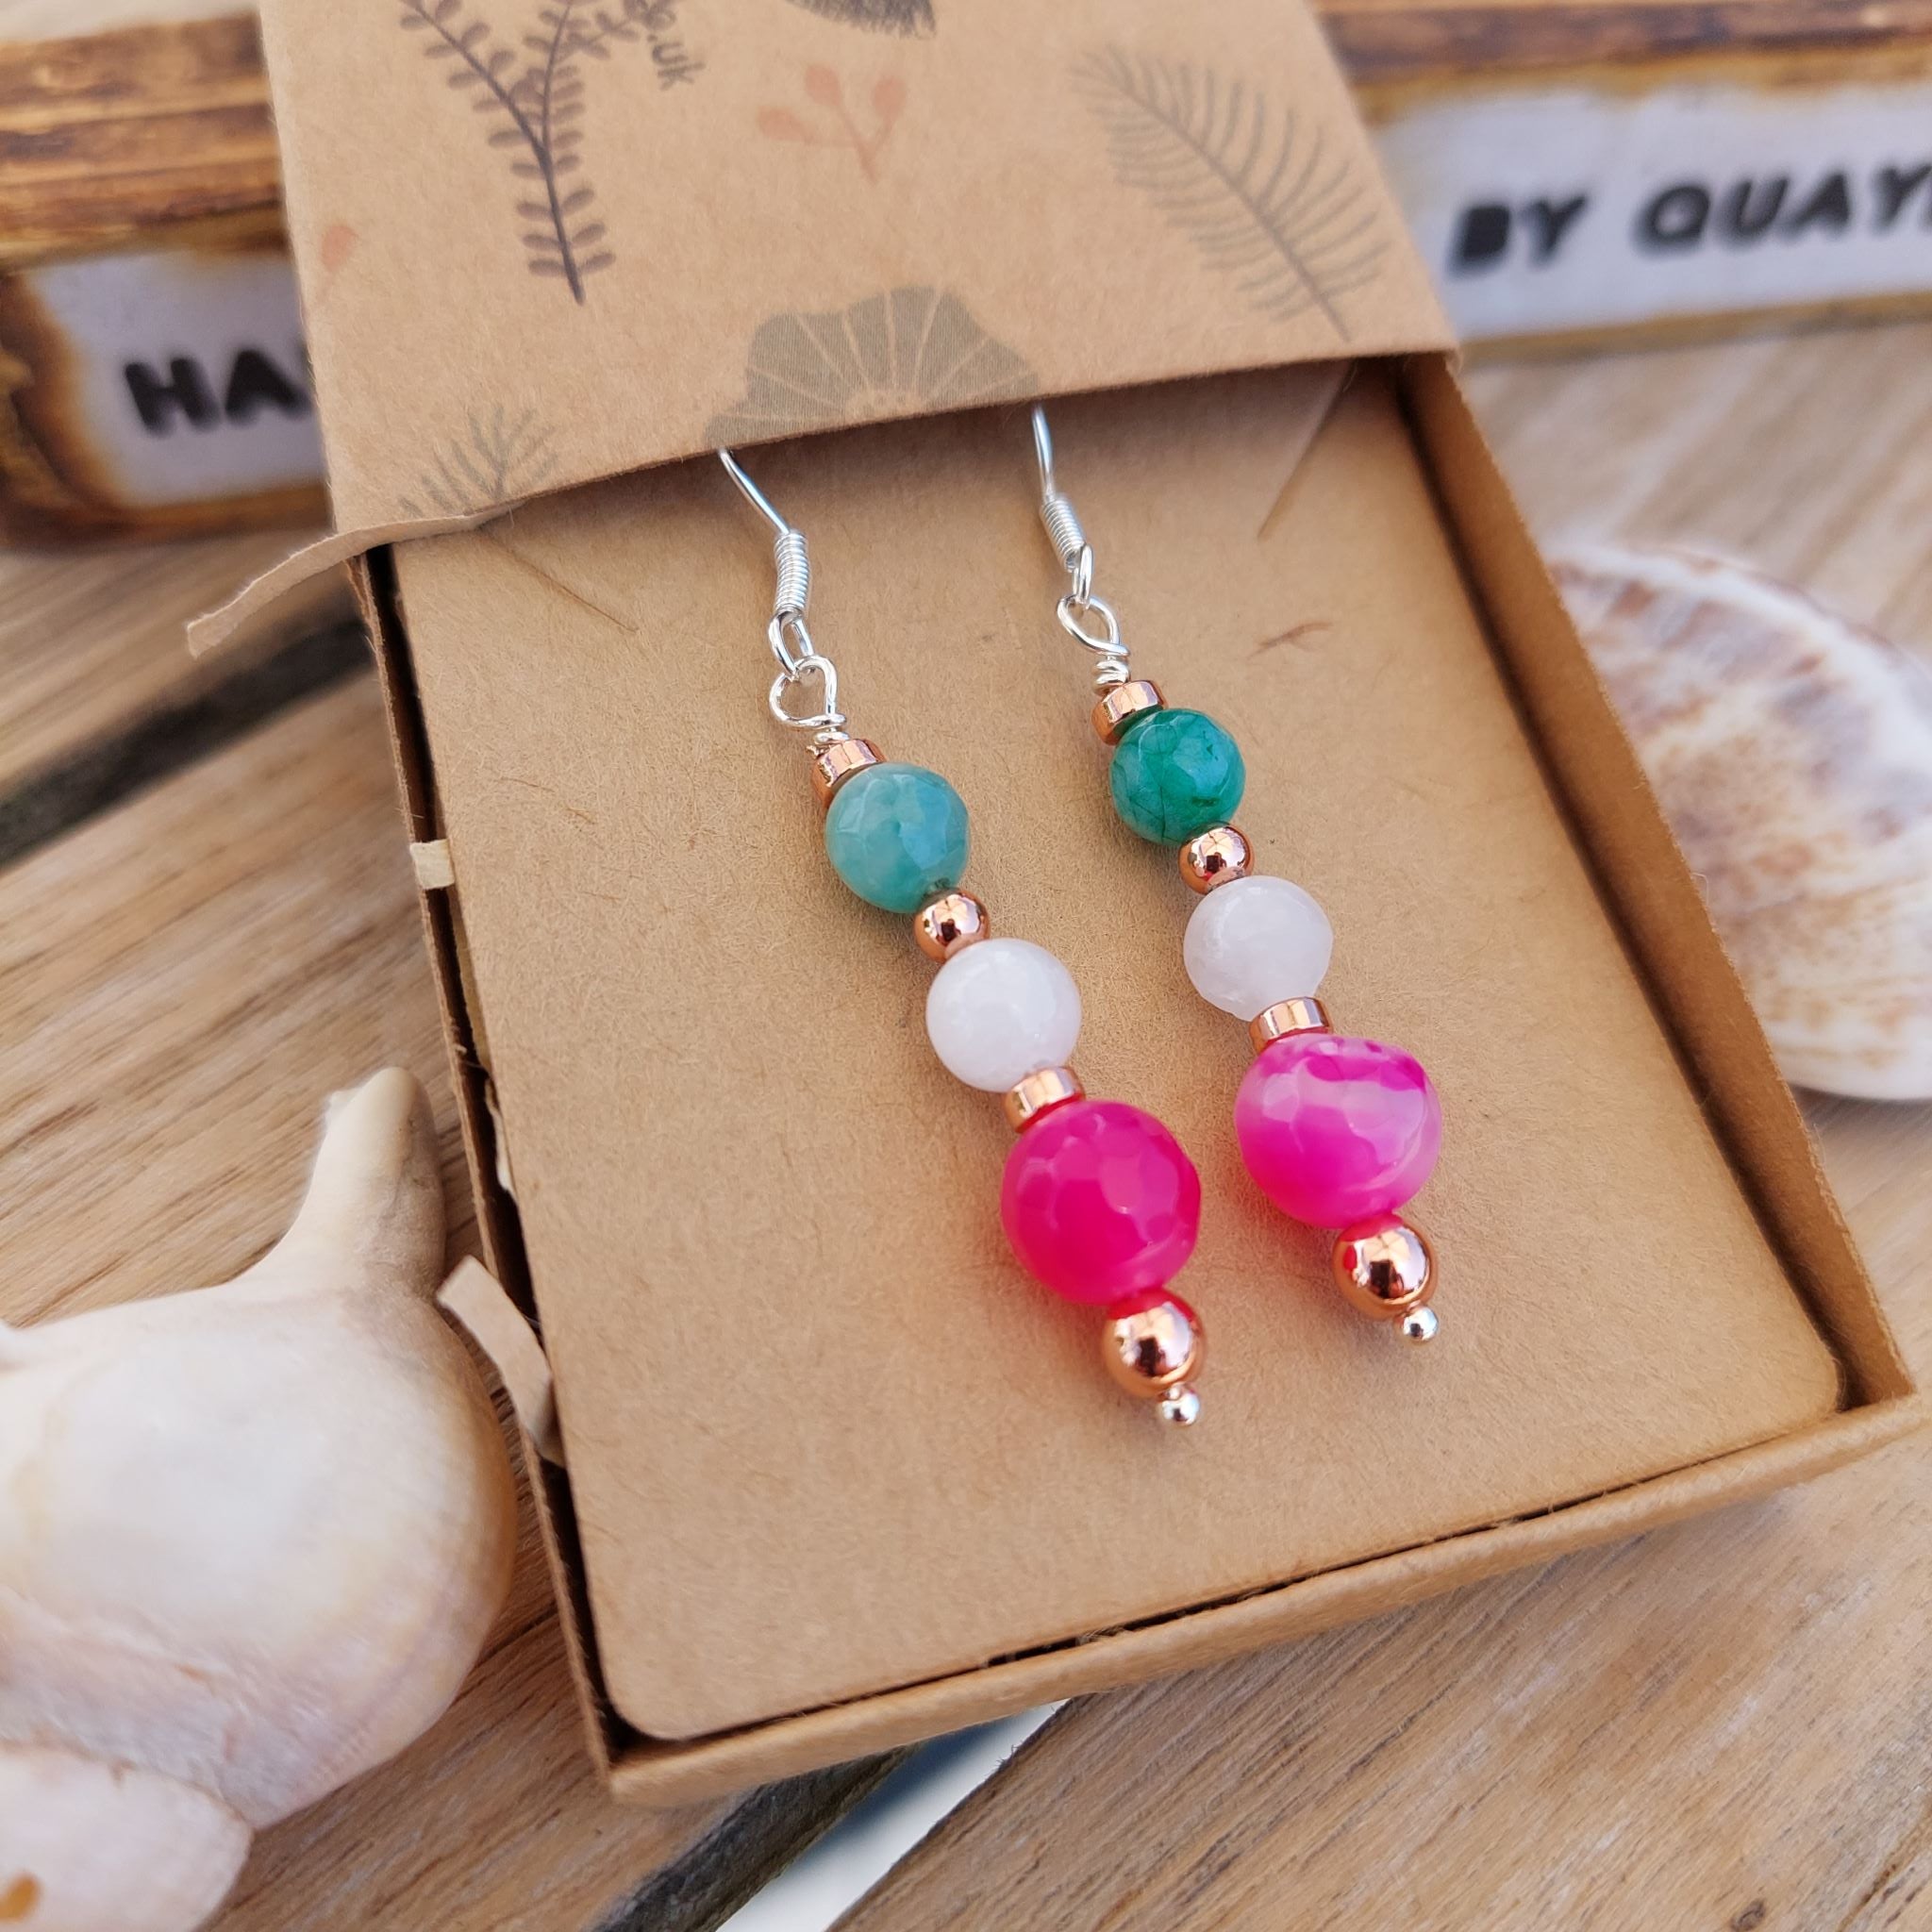 【TOGA PULLA】Beads earringsトーガプルラ